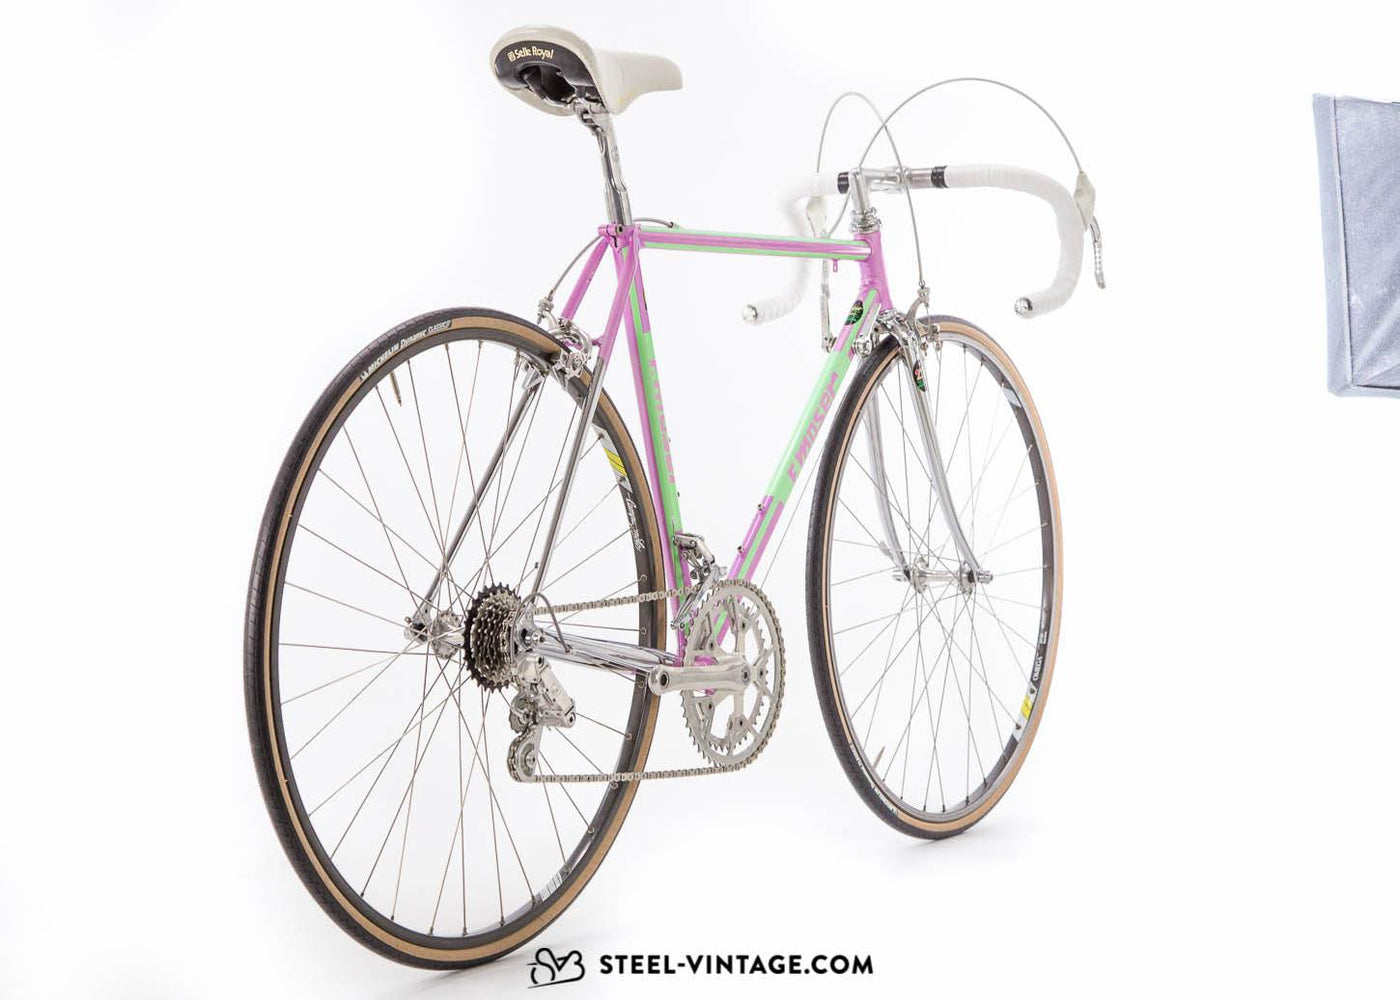 Francesco Moser Leader NP Classic Road Bike 1980s - Steel Vintage Bikes